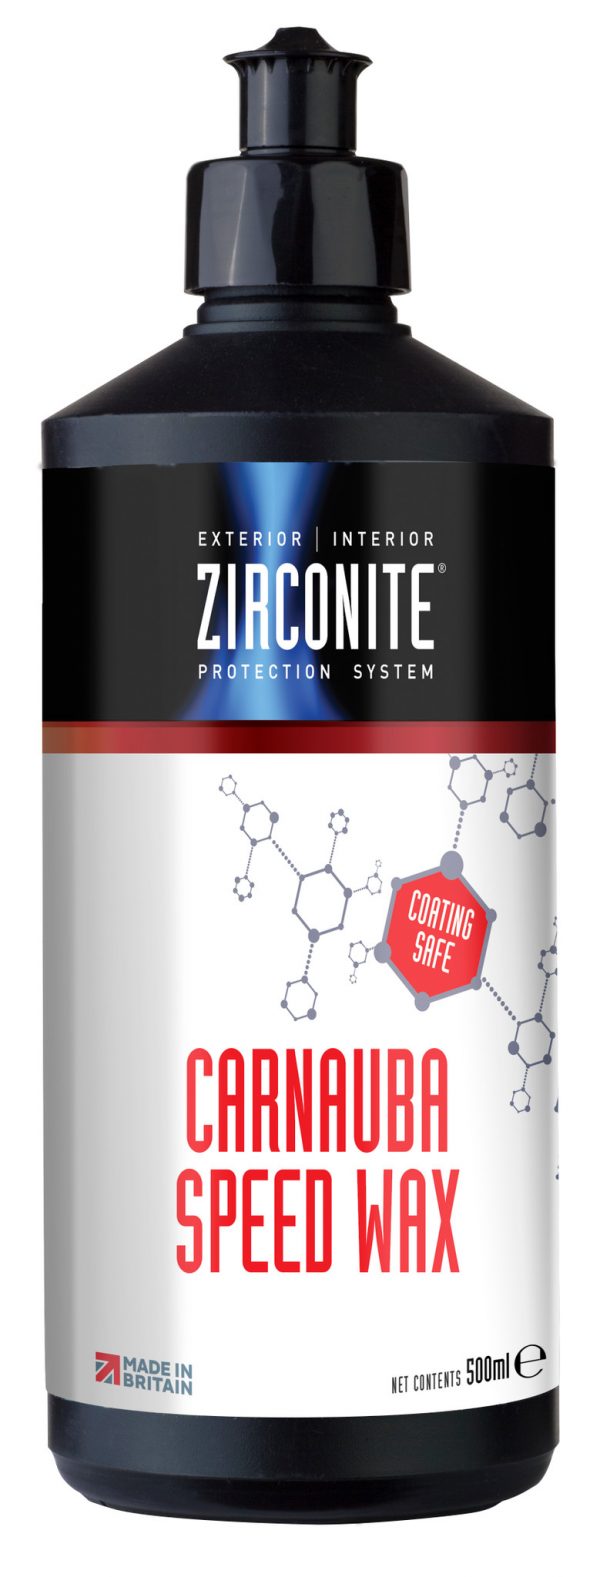 142-zirconite-500ml-carnauba-speed-wax-conical-bottle